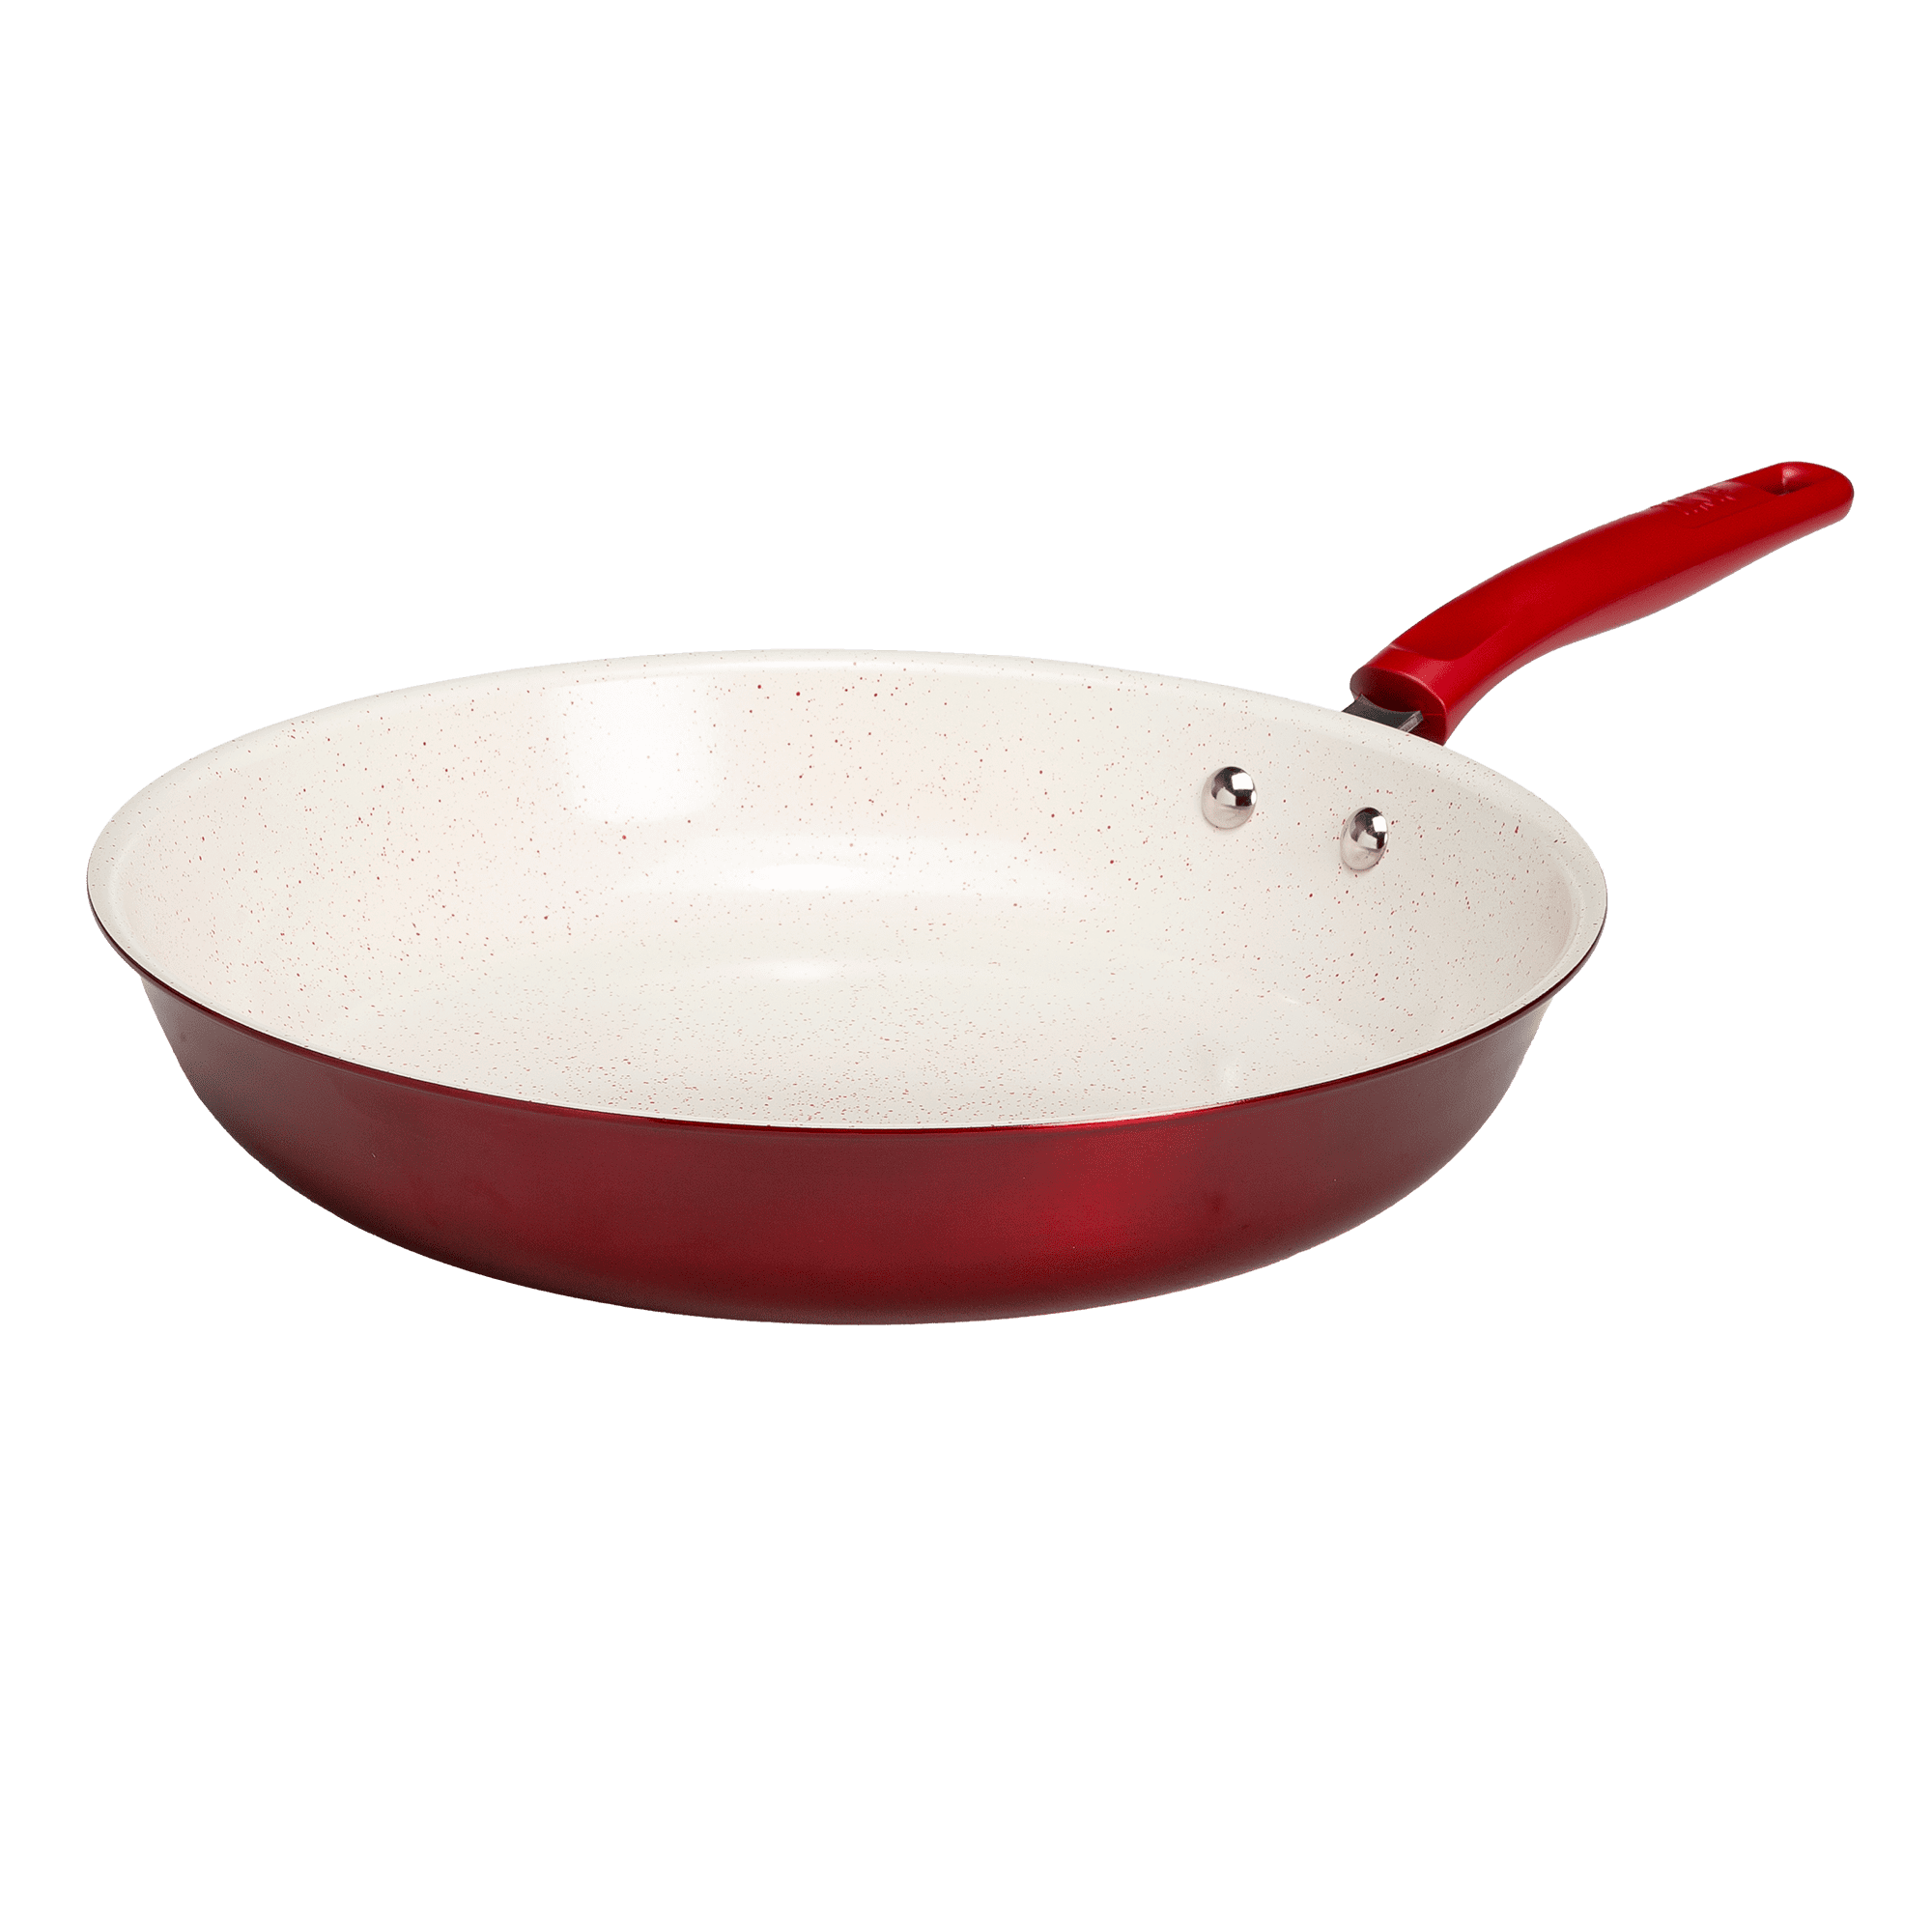 Tasty Clean Ceramic 12 Non-Stick Aluminum Fry Pan, Red